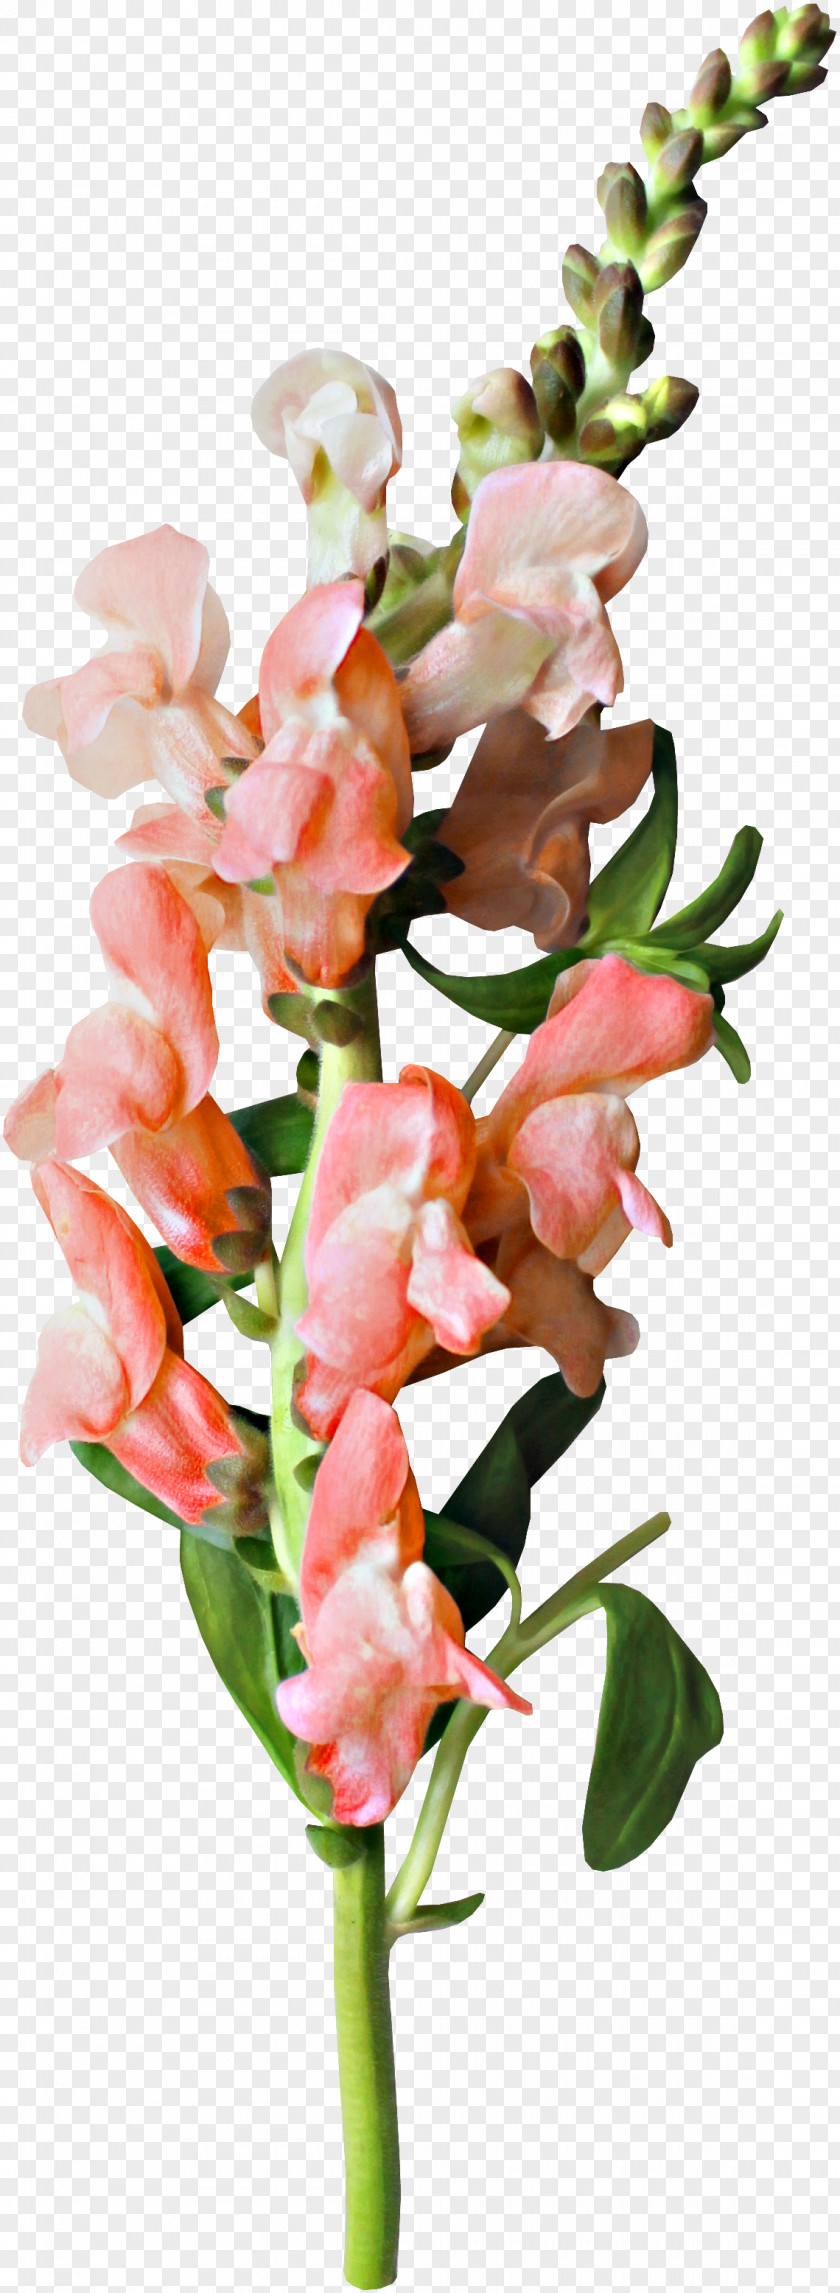 Beautiful Bouquet Of Fresh Flowers Flower Clip Art PNG